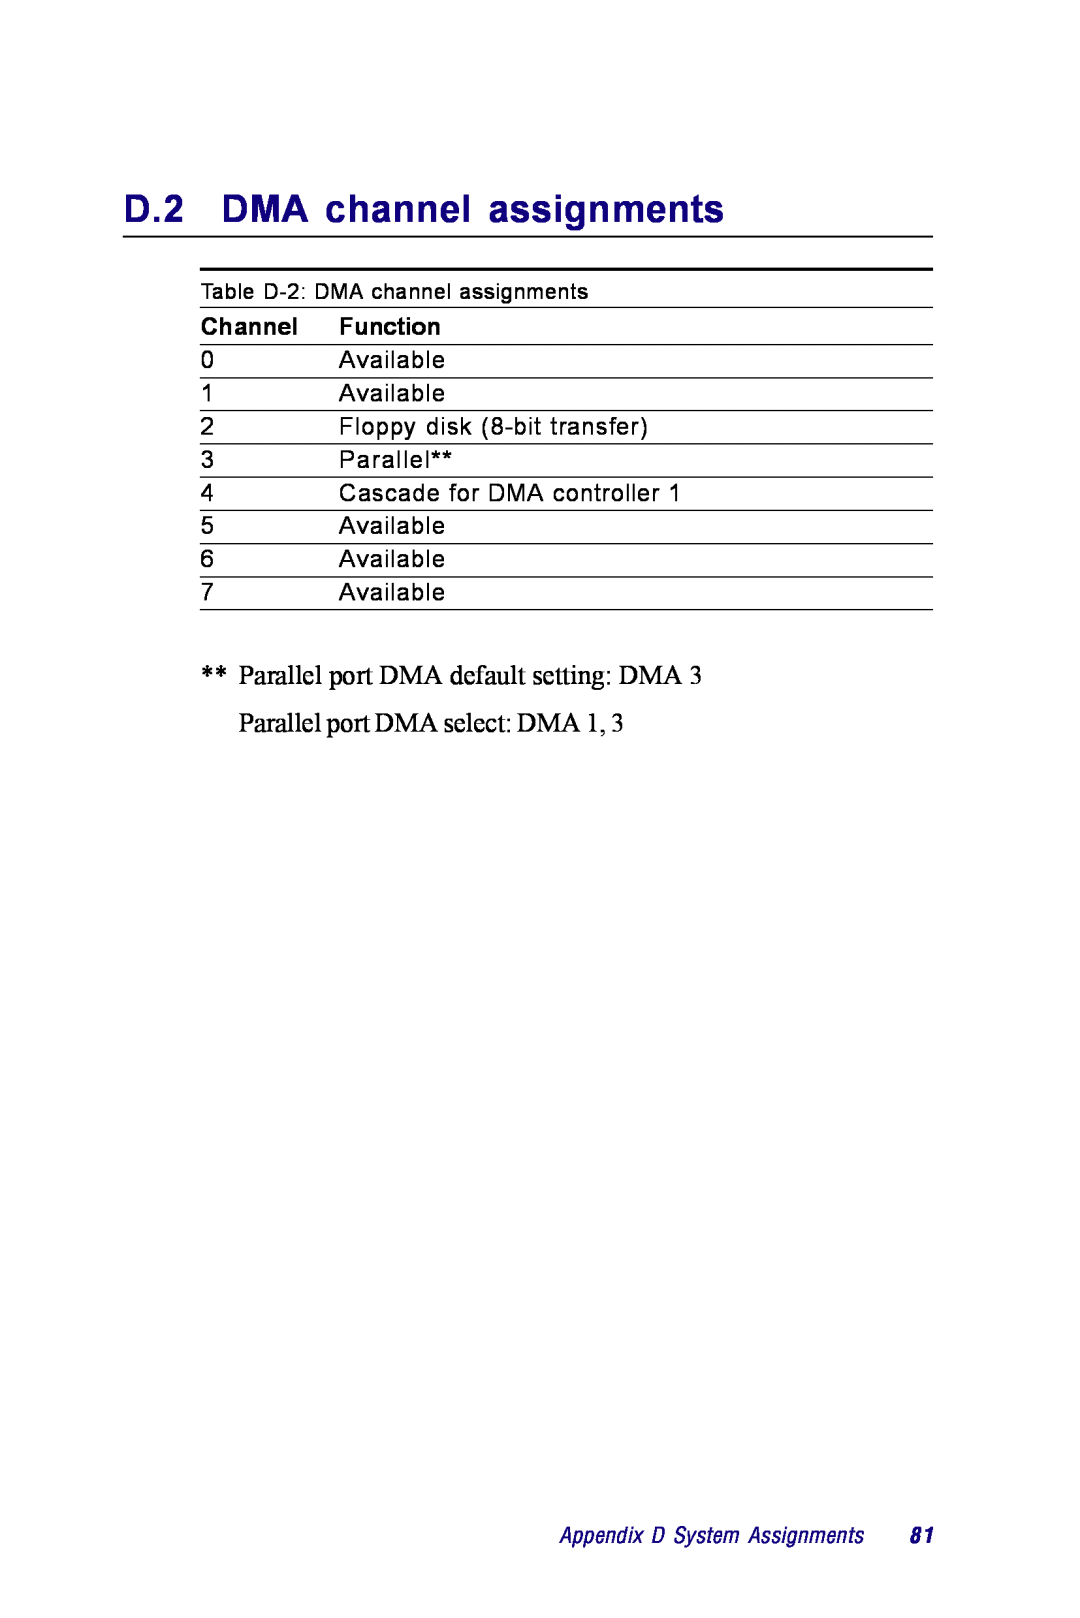 Advantech PCM-3350 Series user manual D.2 DMA channel assignments, Channel Function, Table D-2 DMA channel assignments 